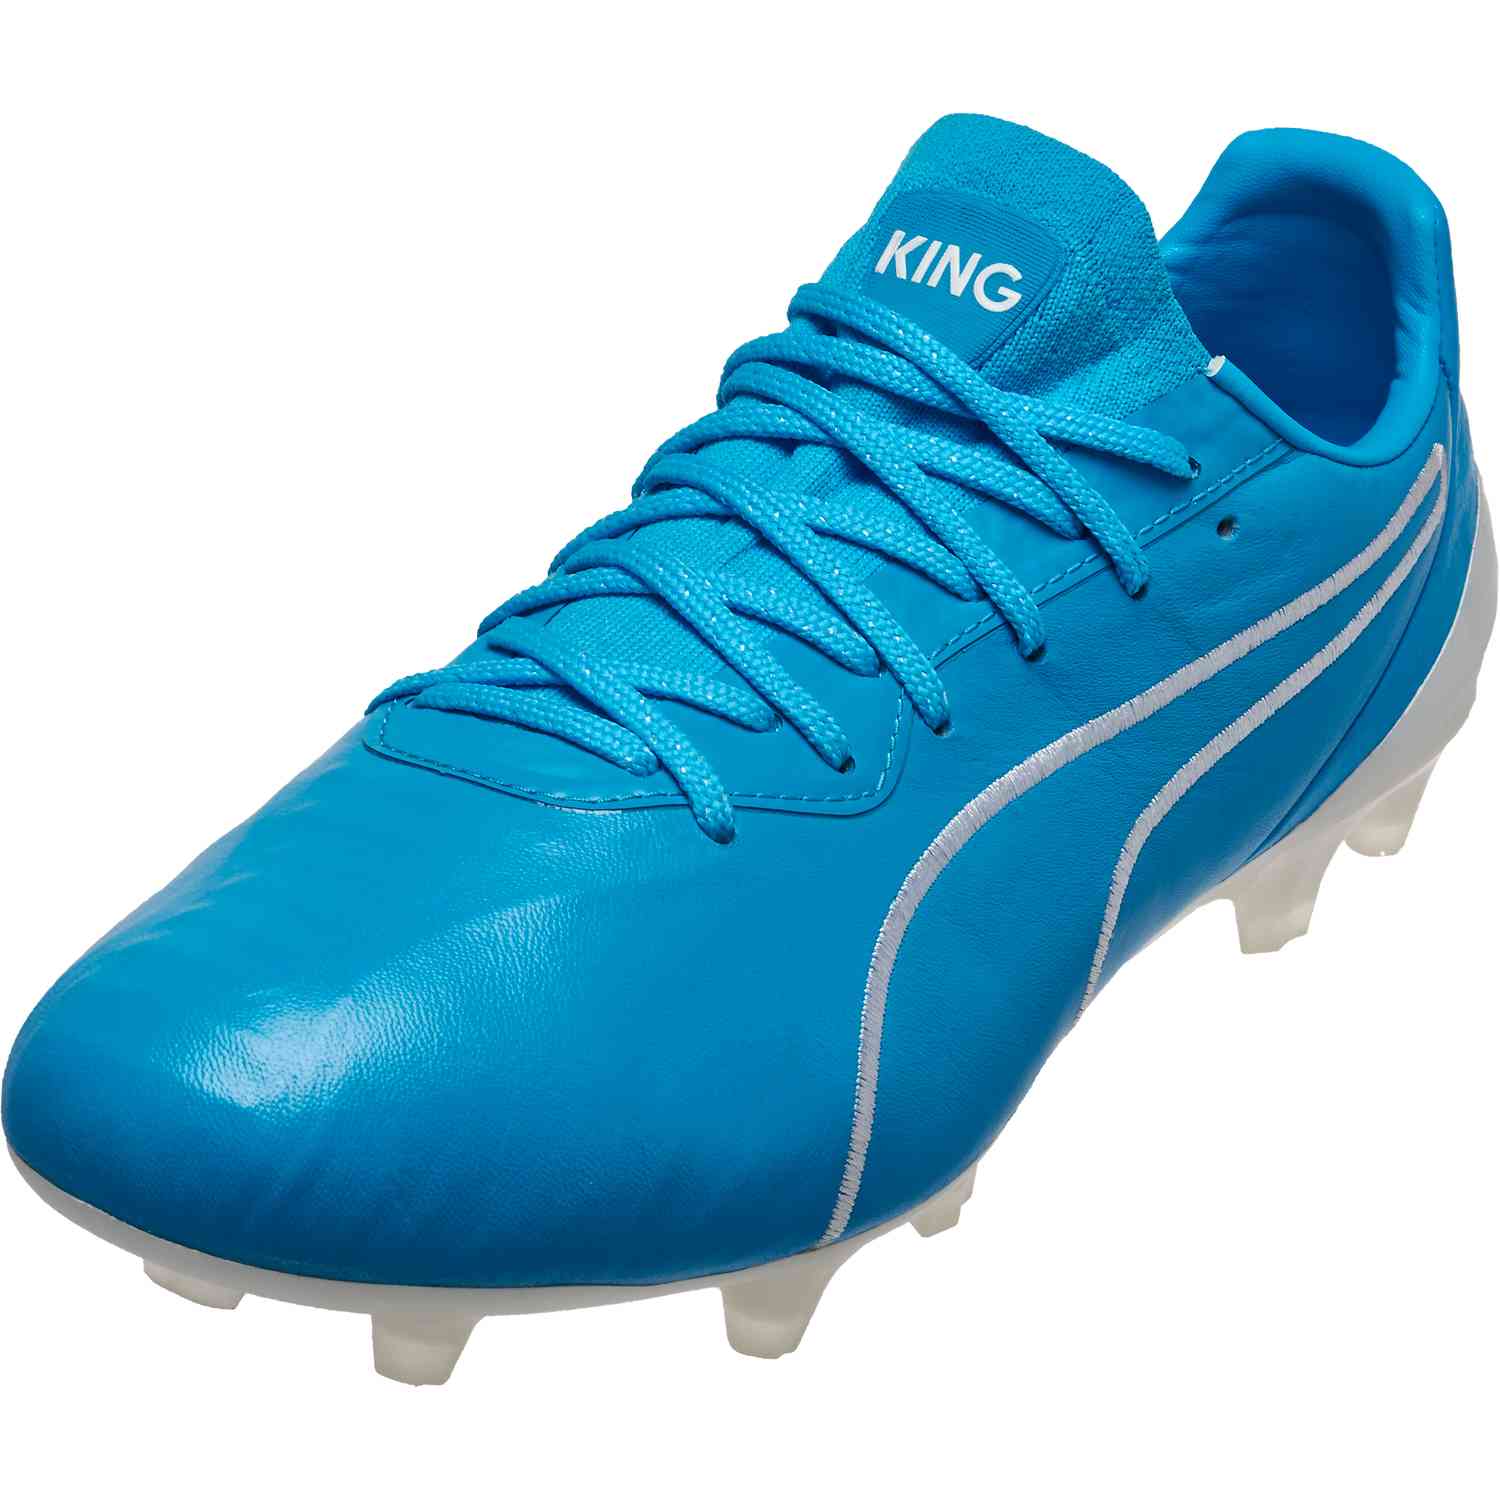 Puma King Platinum FG - Luminous Blue & Puma White - Soccer Master